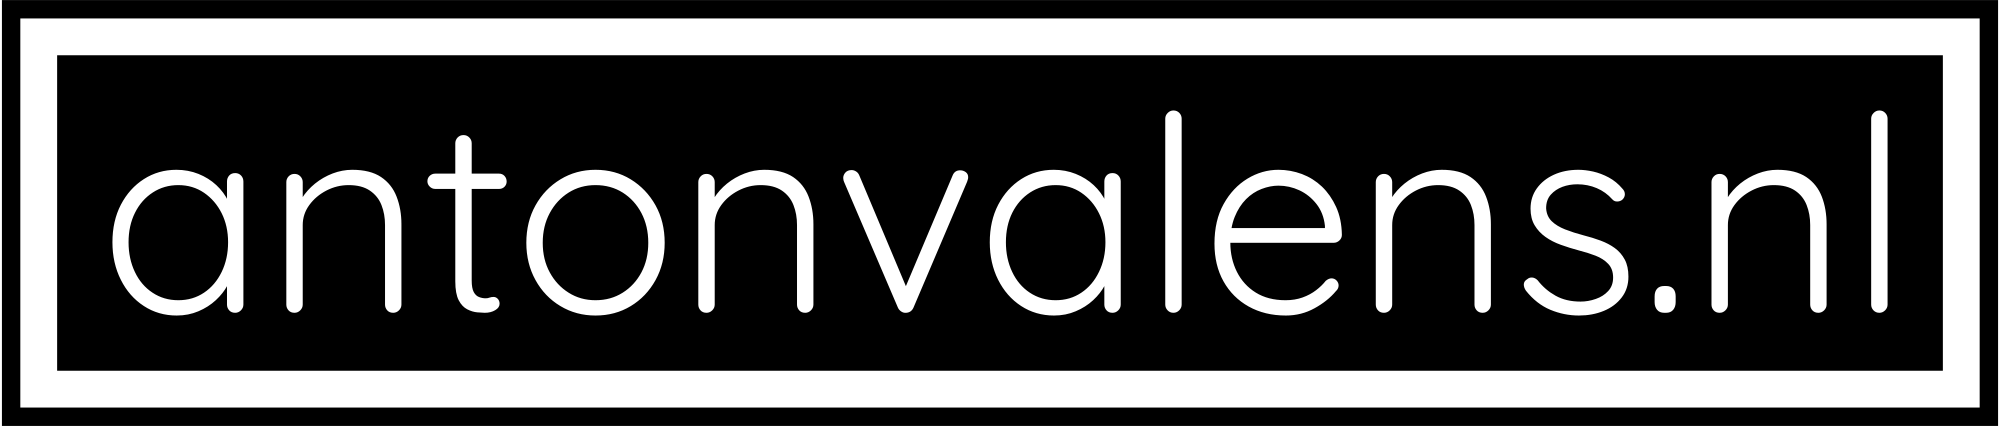 antonvalensnl-high-resolution-logo-transparent